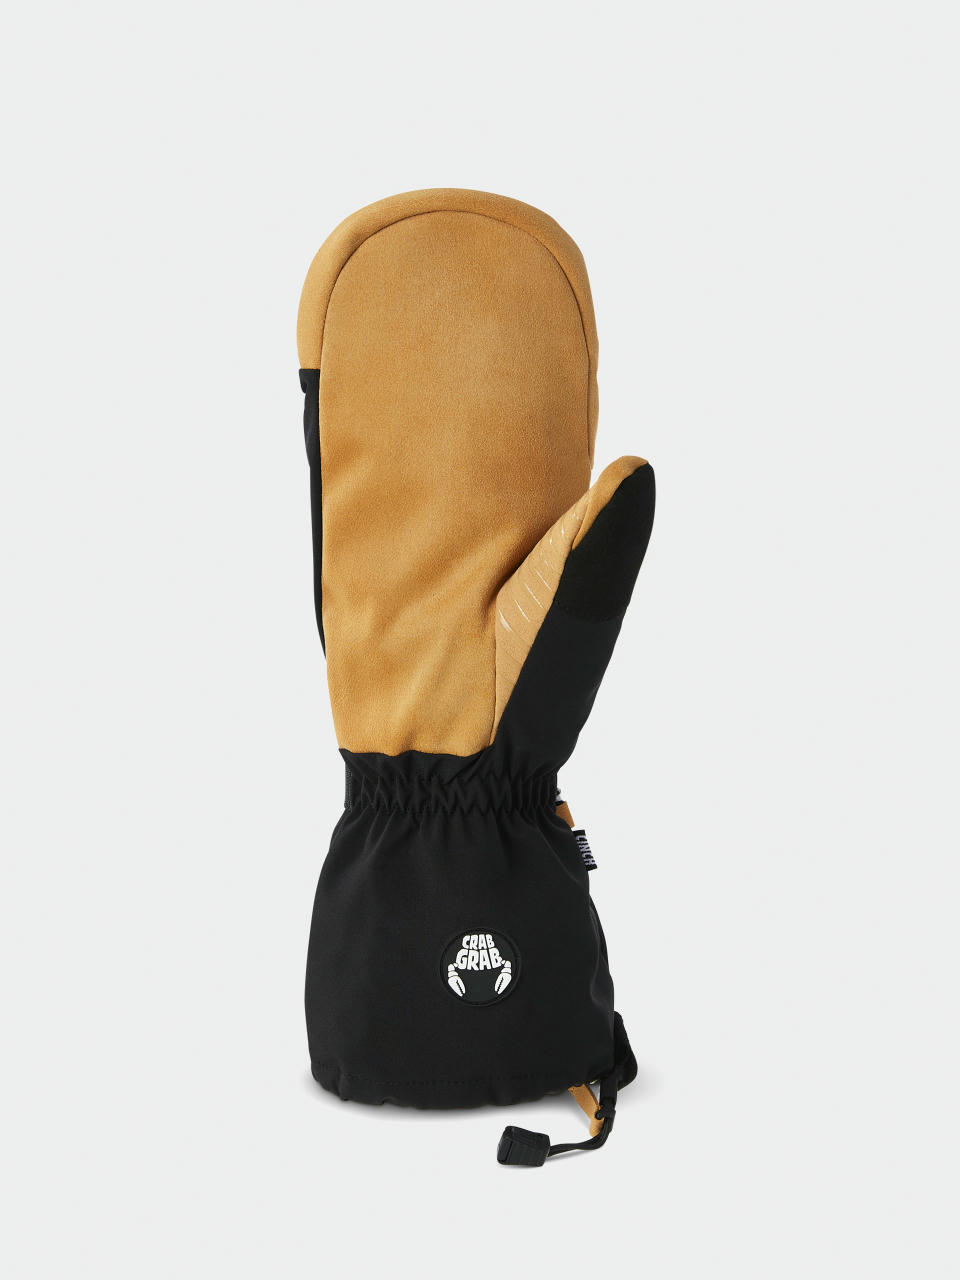 Crab Grab - Cinch Trigger - Black, Unisex, Gloves, Mittens